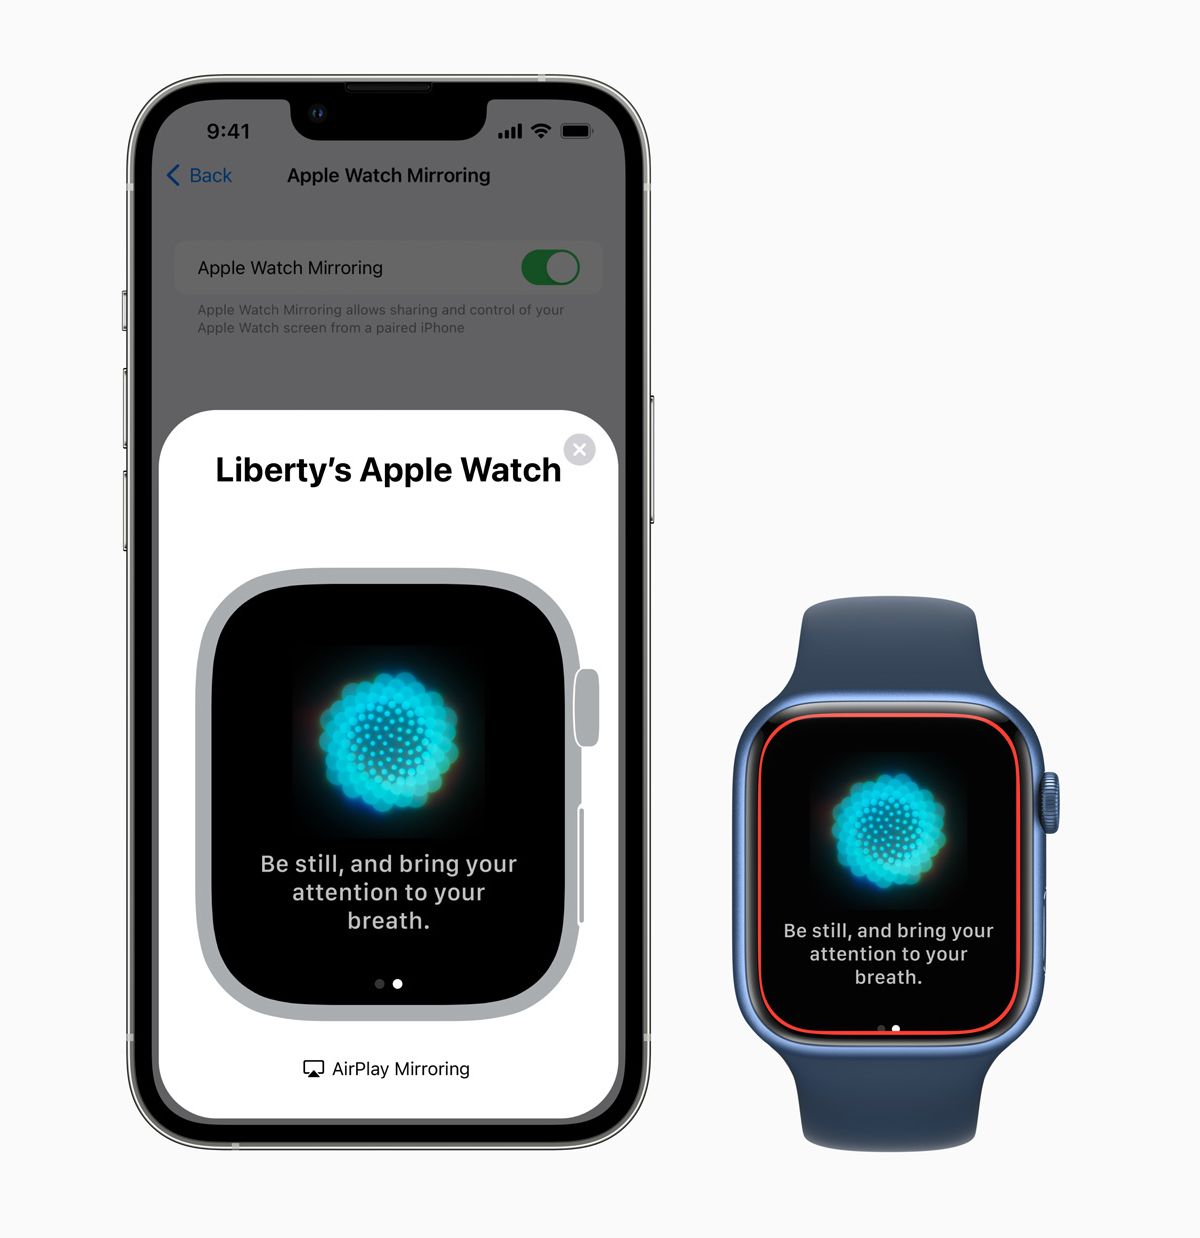 apple-watch-mirroring-accessibilite